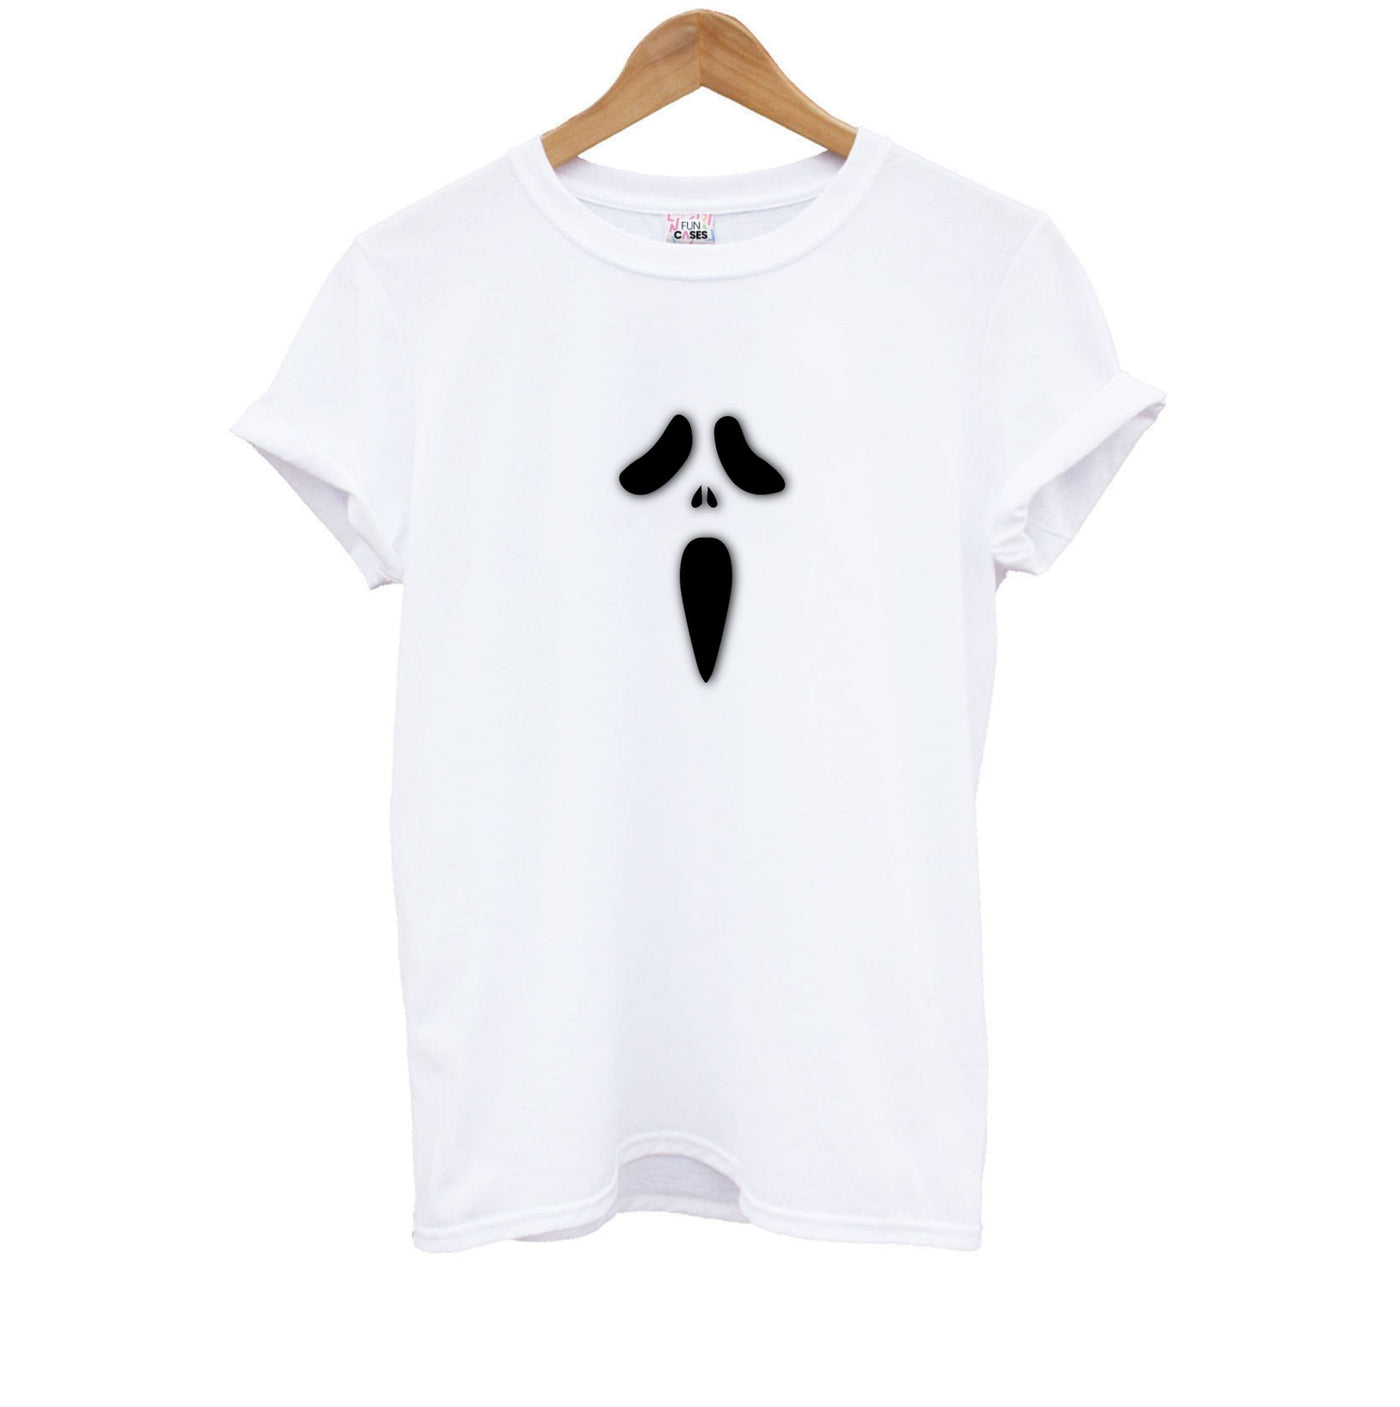 Scream - Halloween  Kids T-Shirt